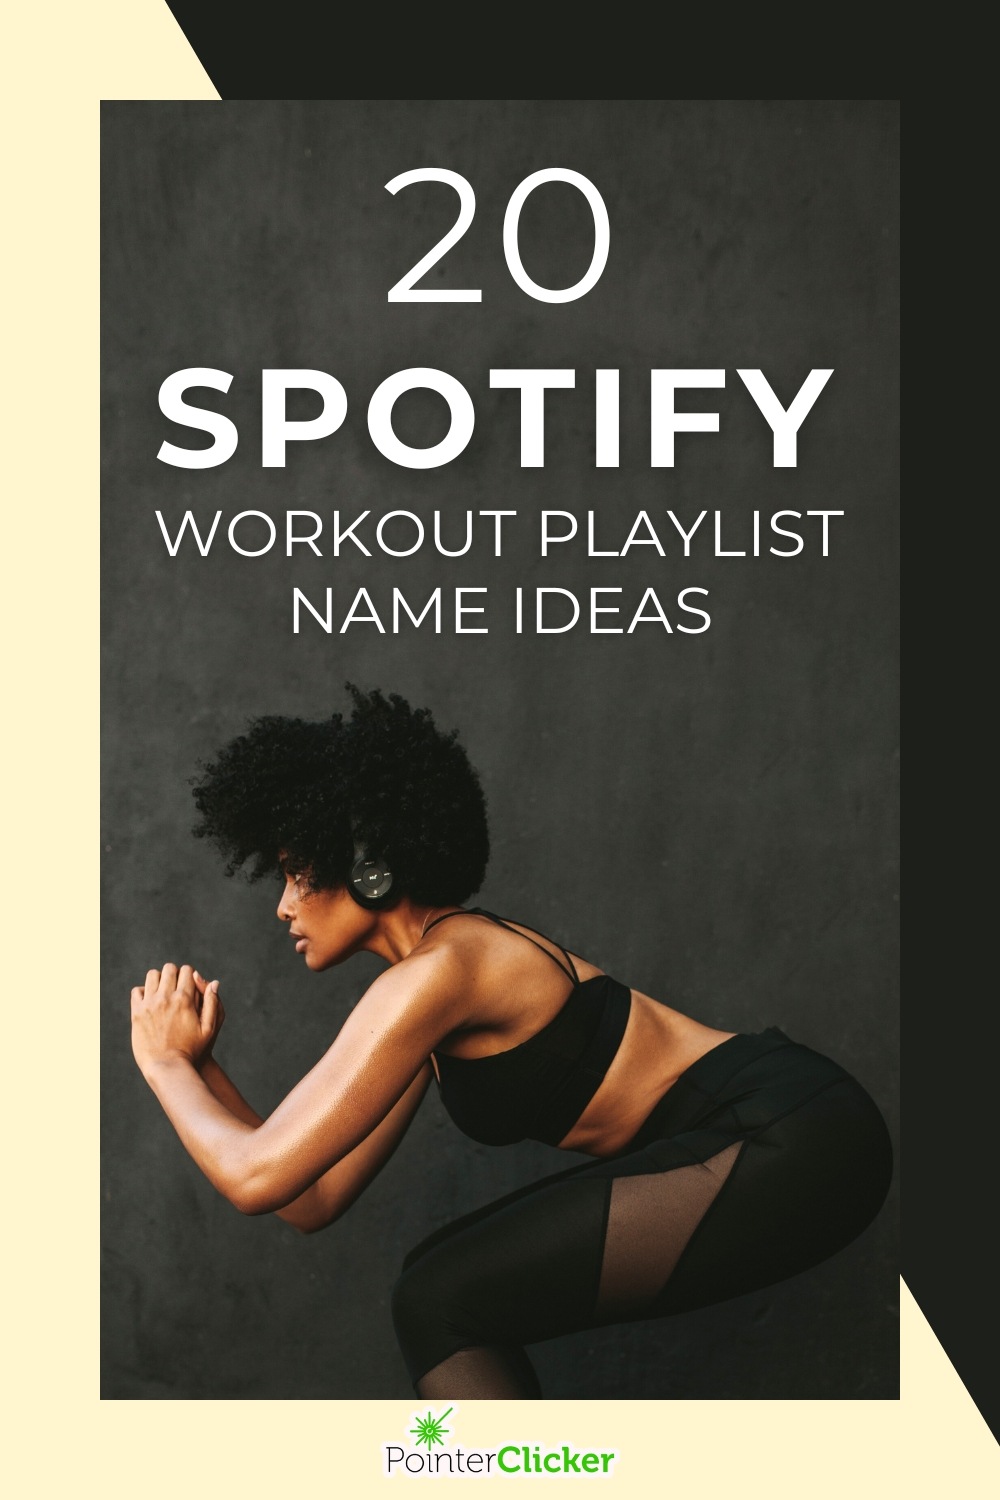 20 spotify workout playlist name ideas